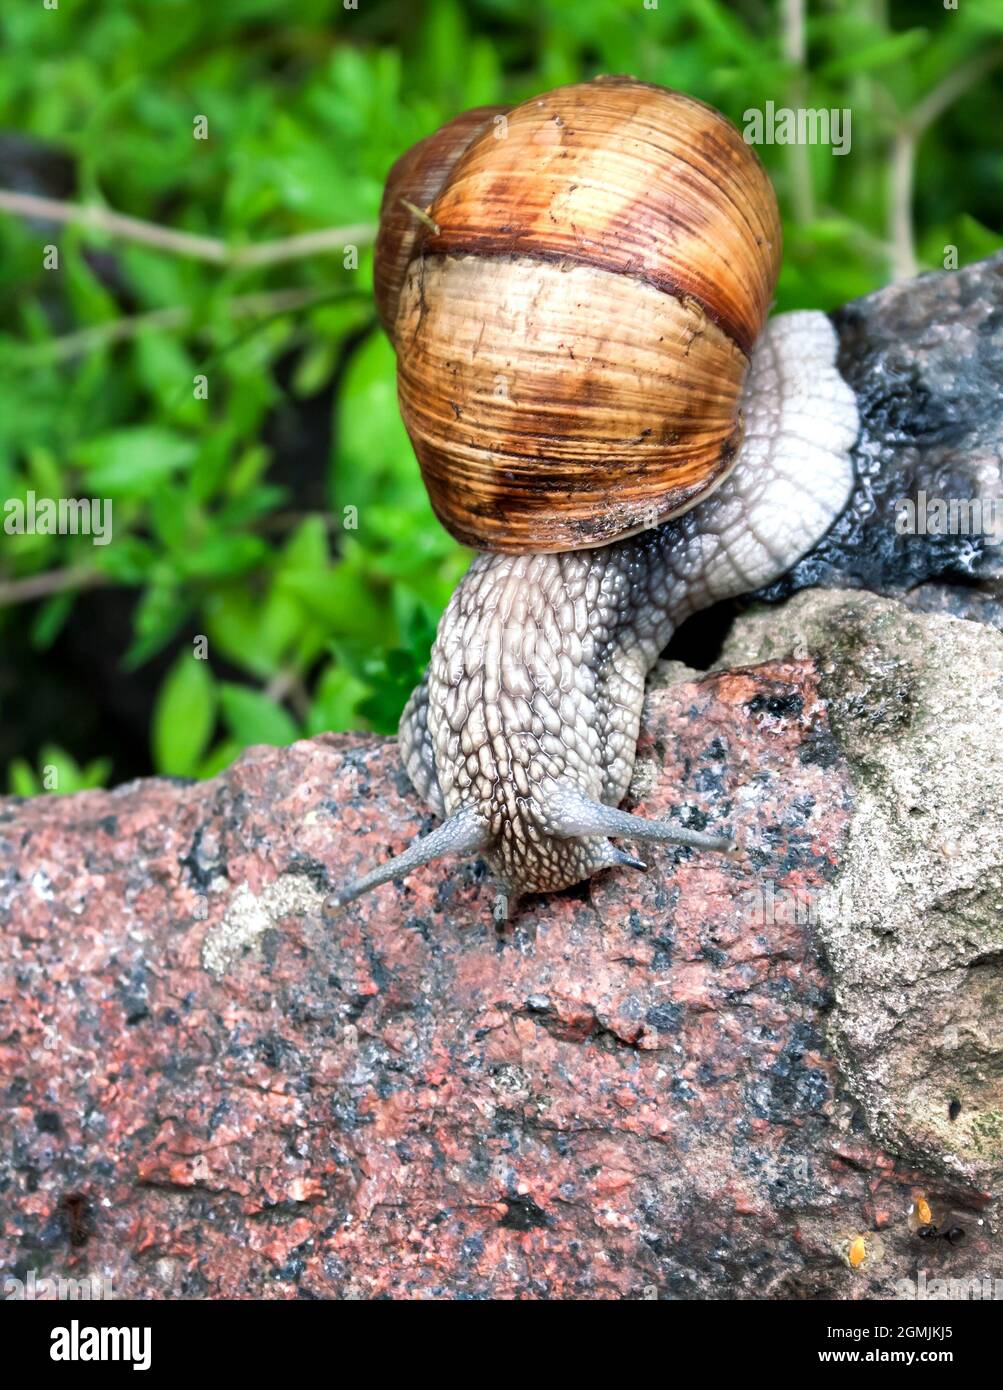 Burgundy snail (Helix pomatia) or escargot in natural environment. Closeup Stock Photo